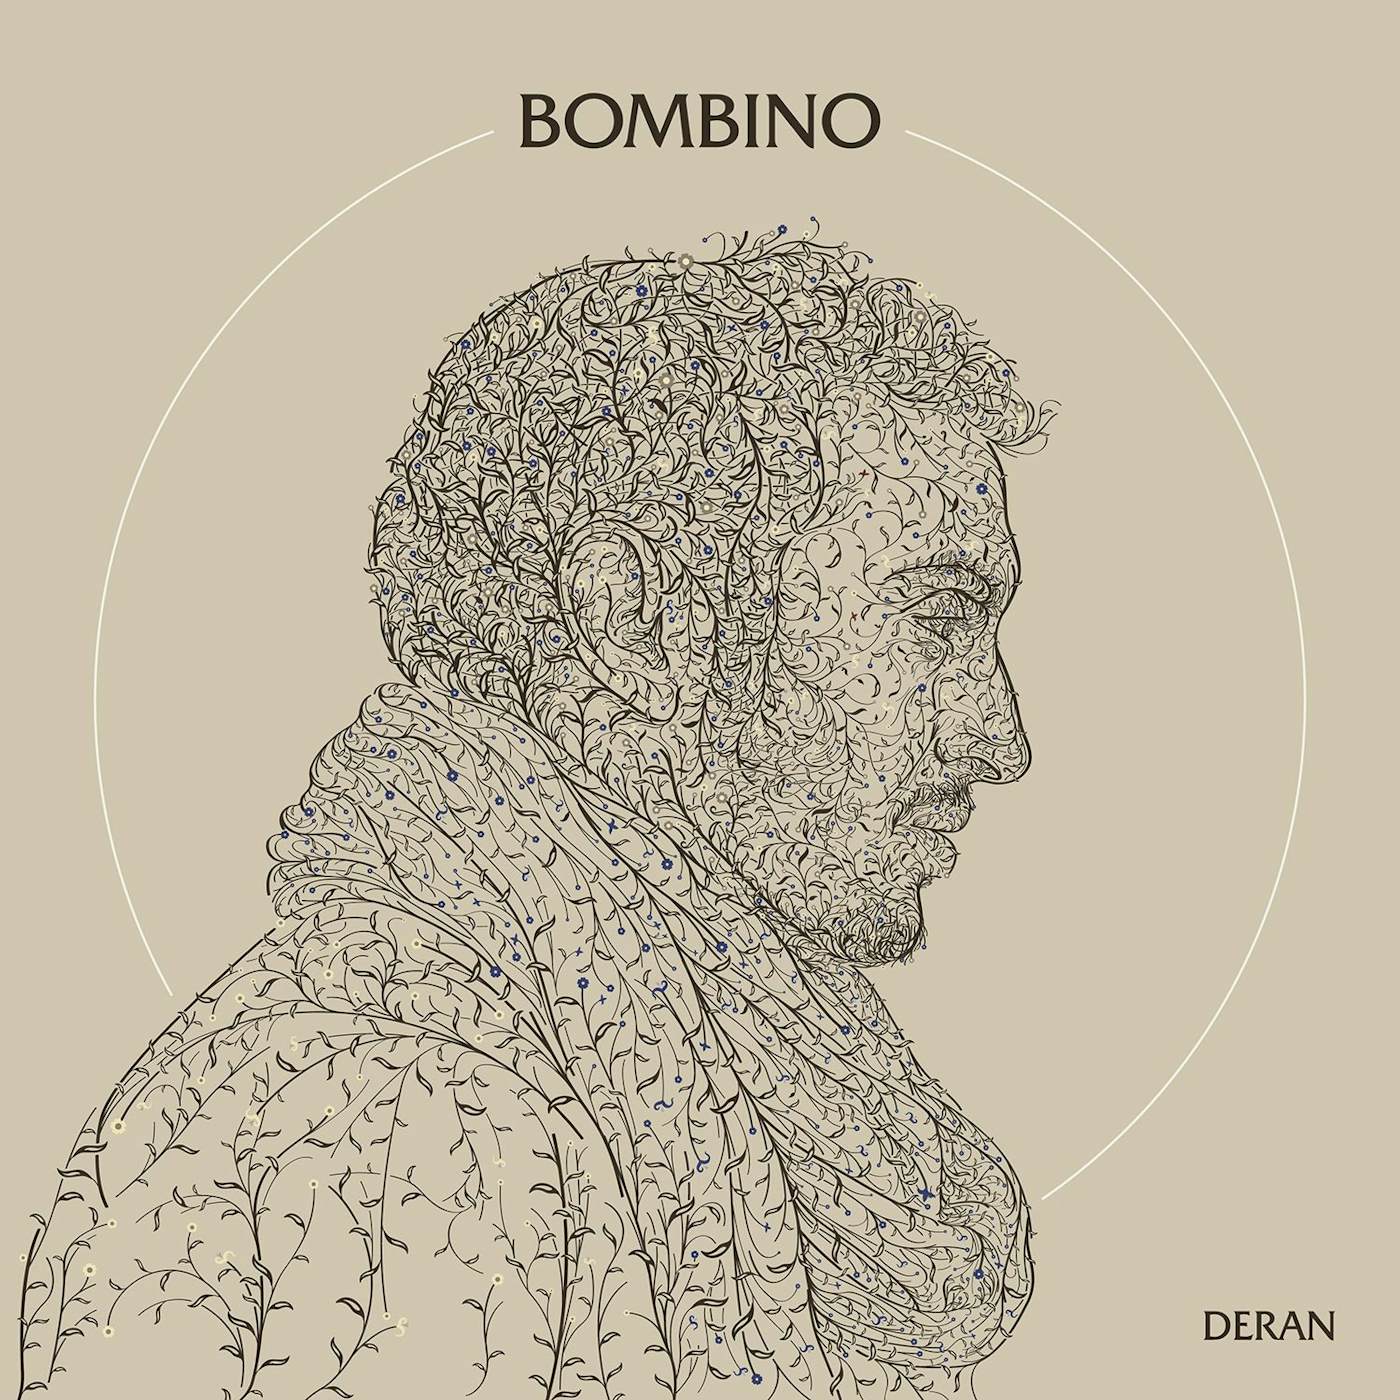 Bombino DERAN CD